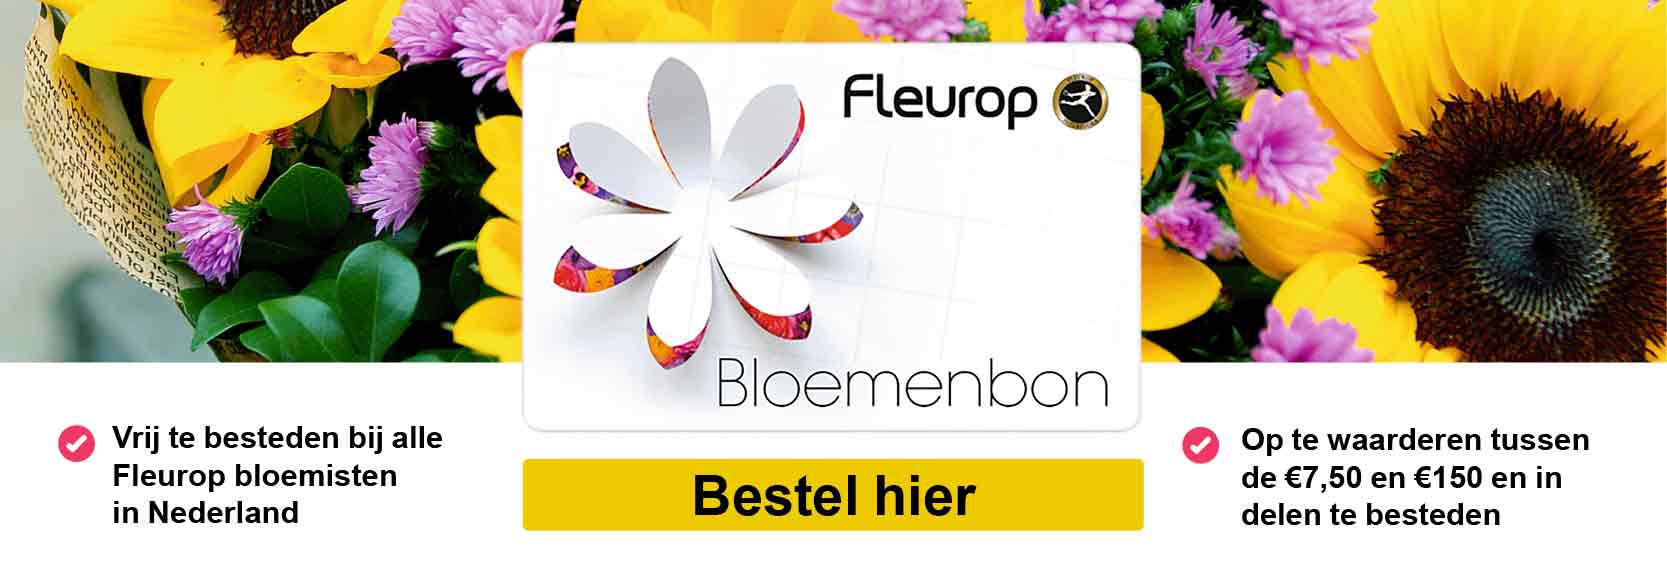 Fleurop_banner_def